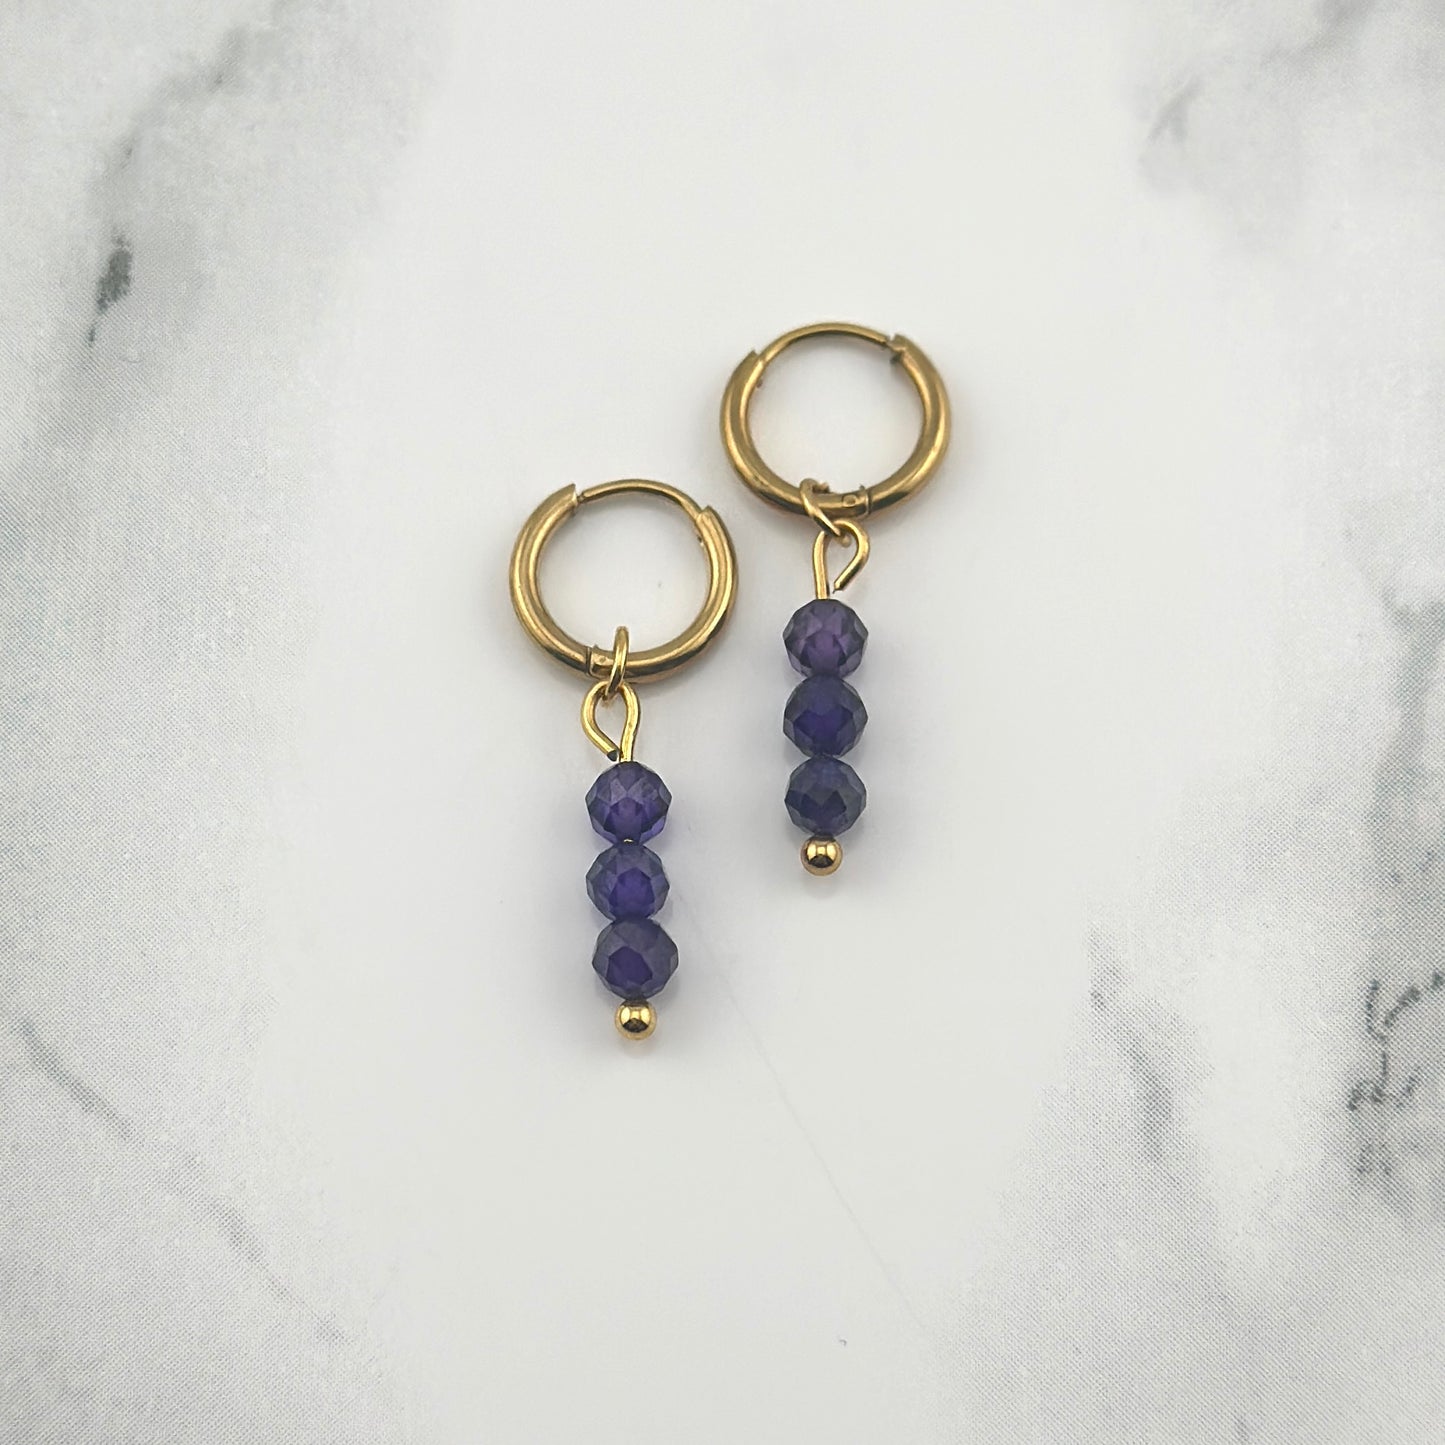 Tiny purple beads Hoops